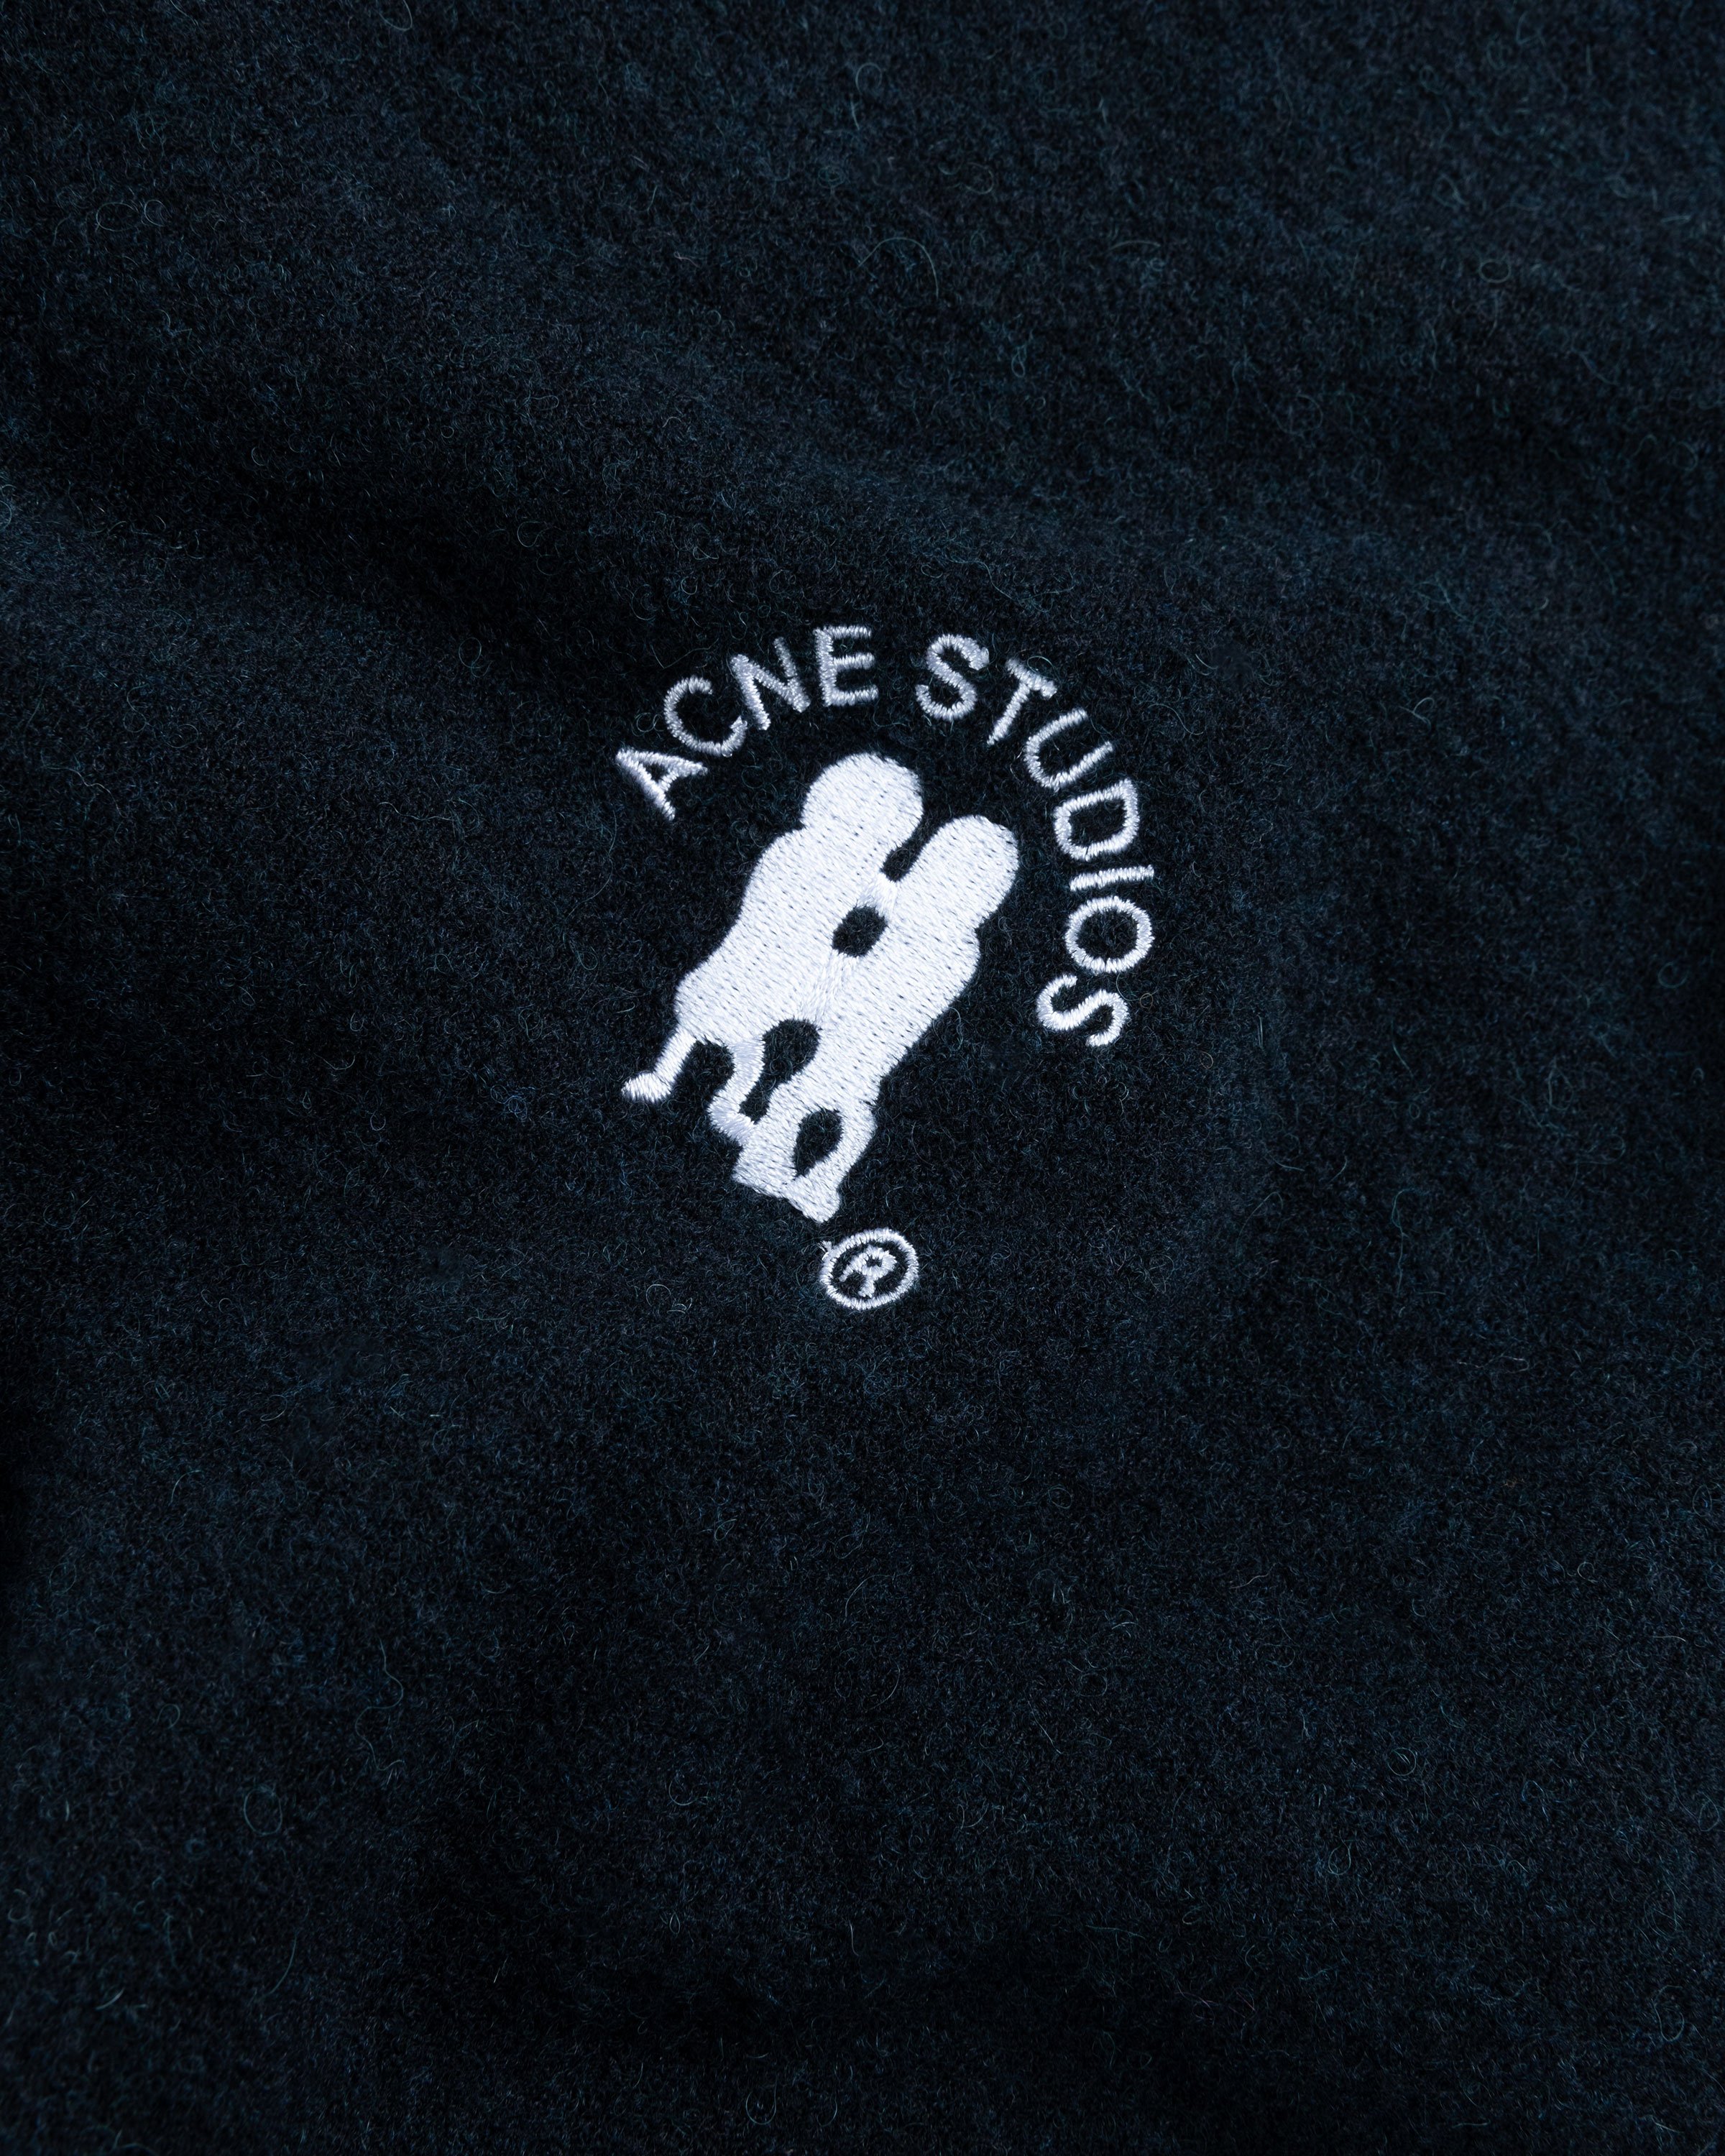 Acne Studios - Embroidered Logo Crewneck Dark Navy Melange - Clothing - Blue - Image 6